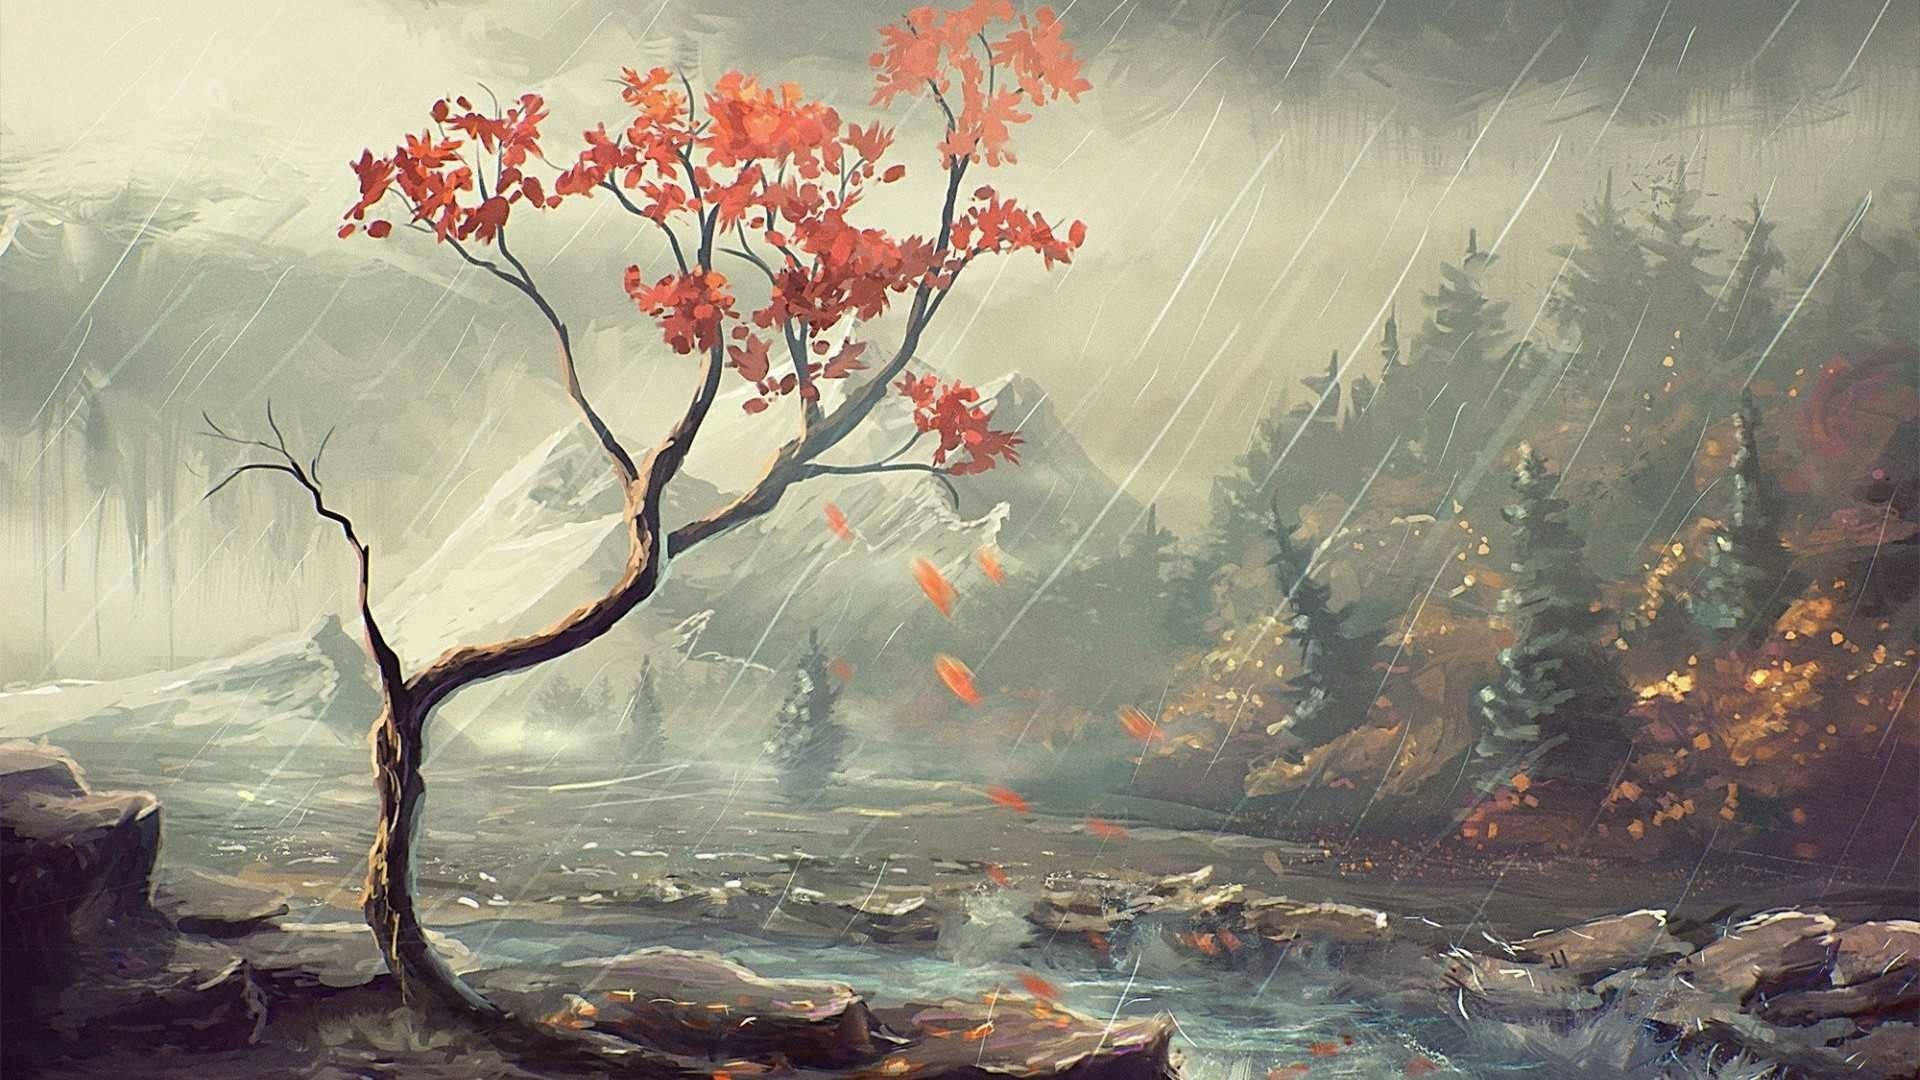 Rainy Forest Paint Art Wallpaper